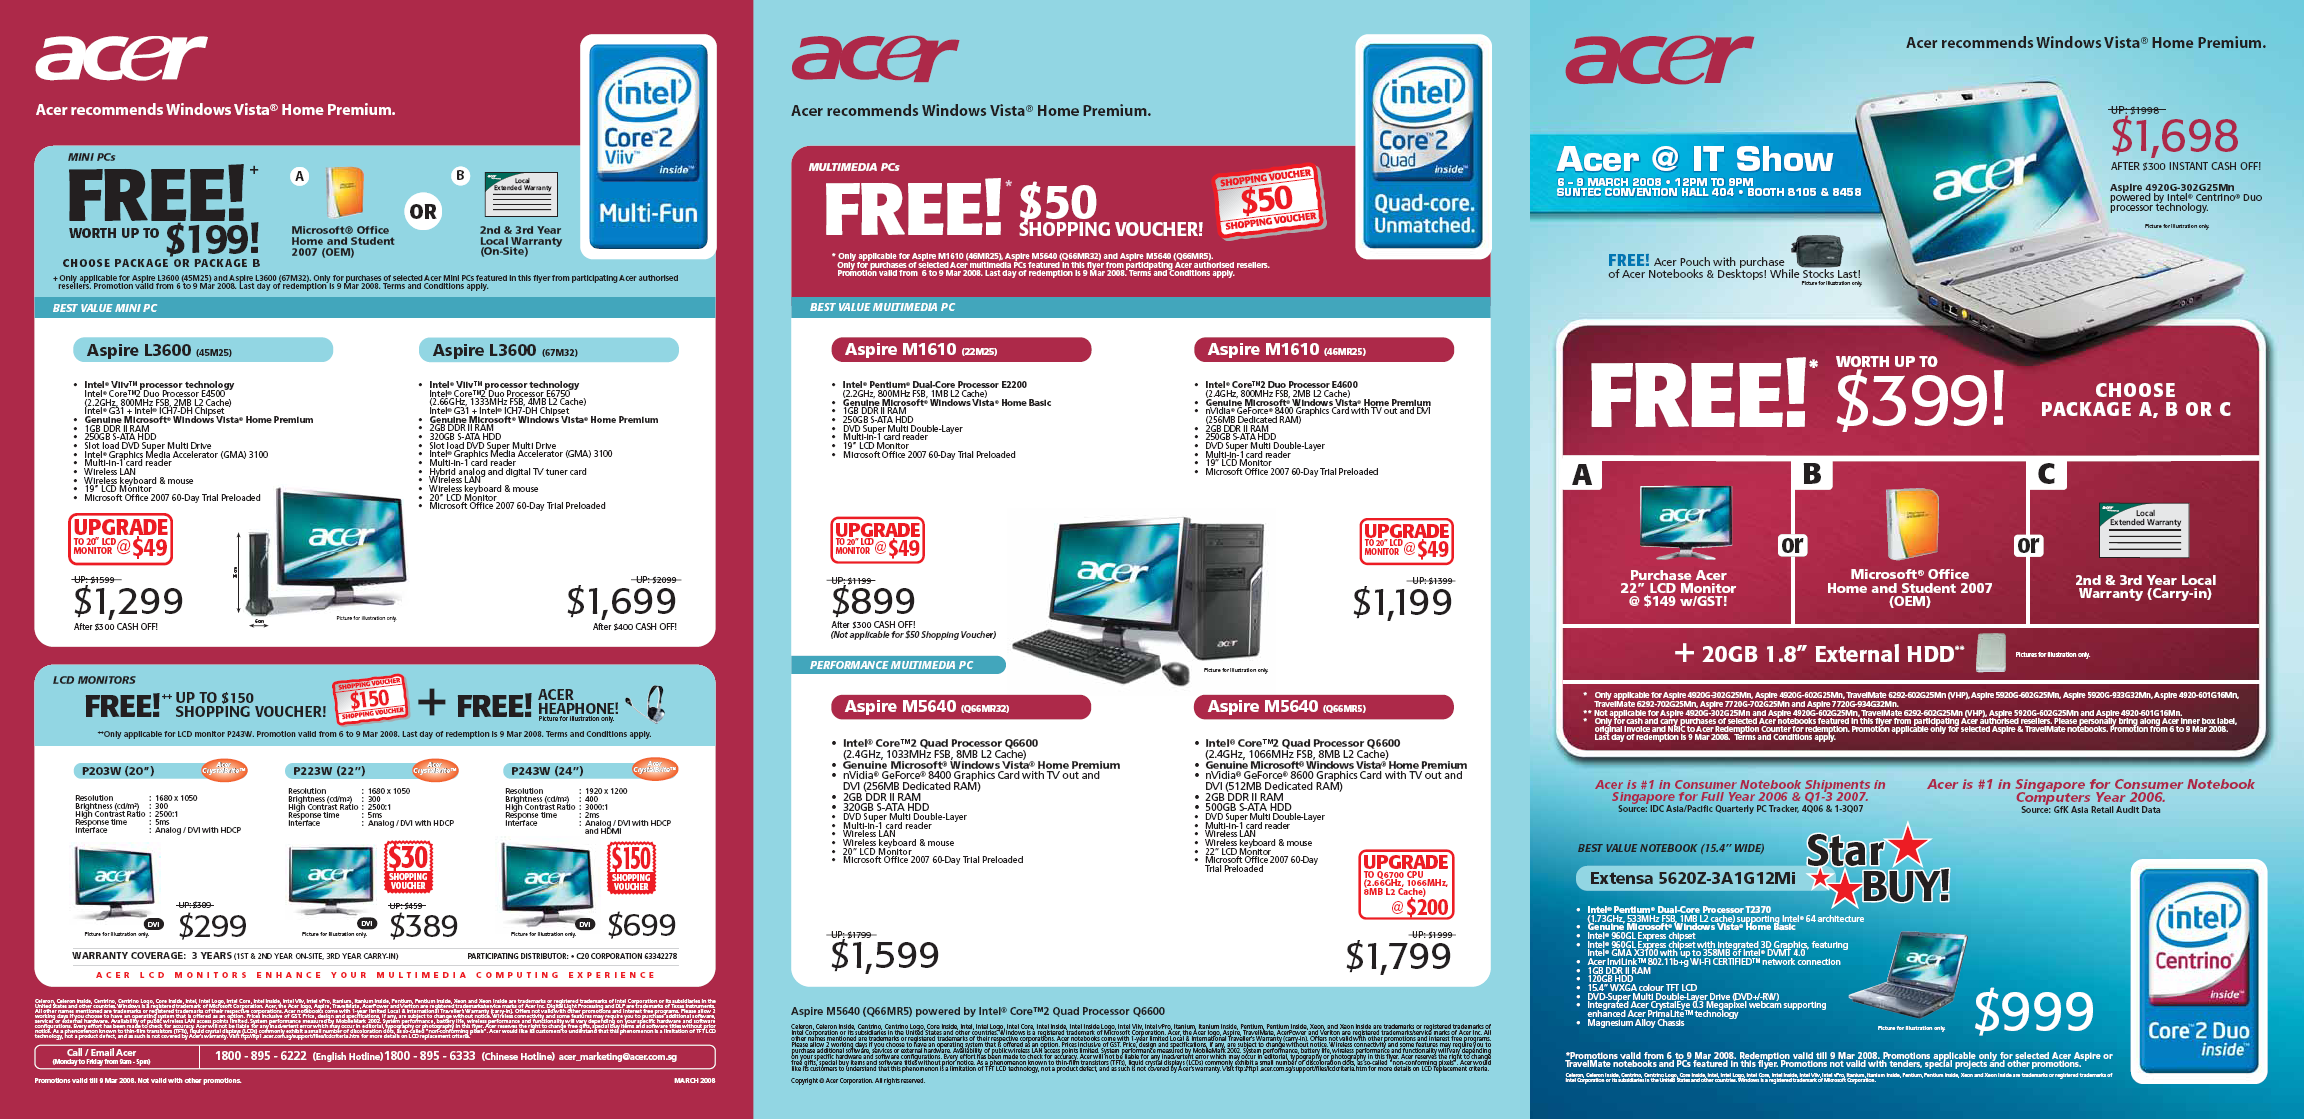 IT Show 2008 price list image brochure of Acer Notebooks Desktops Aspire L3600 LCD Monitors M1610 M5640 4920G Extensa 5620z